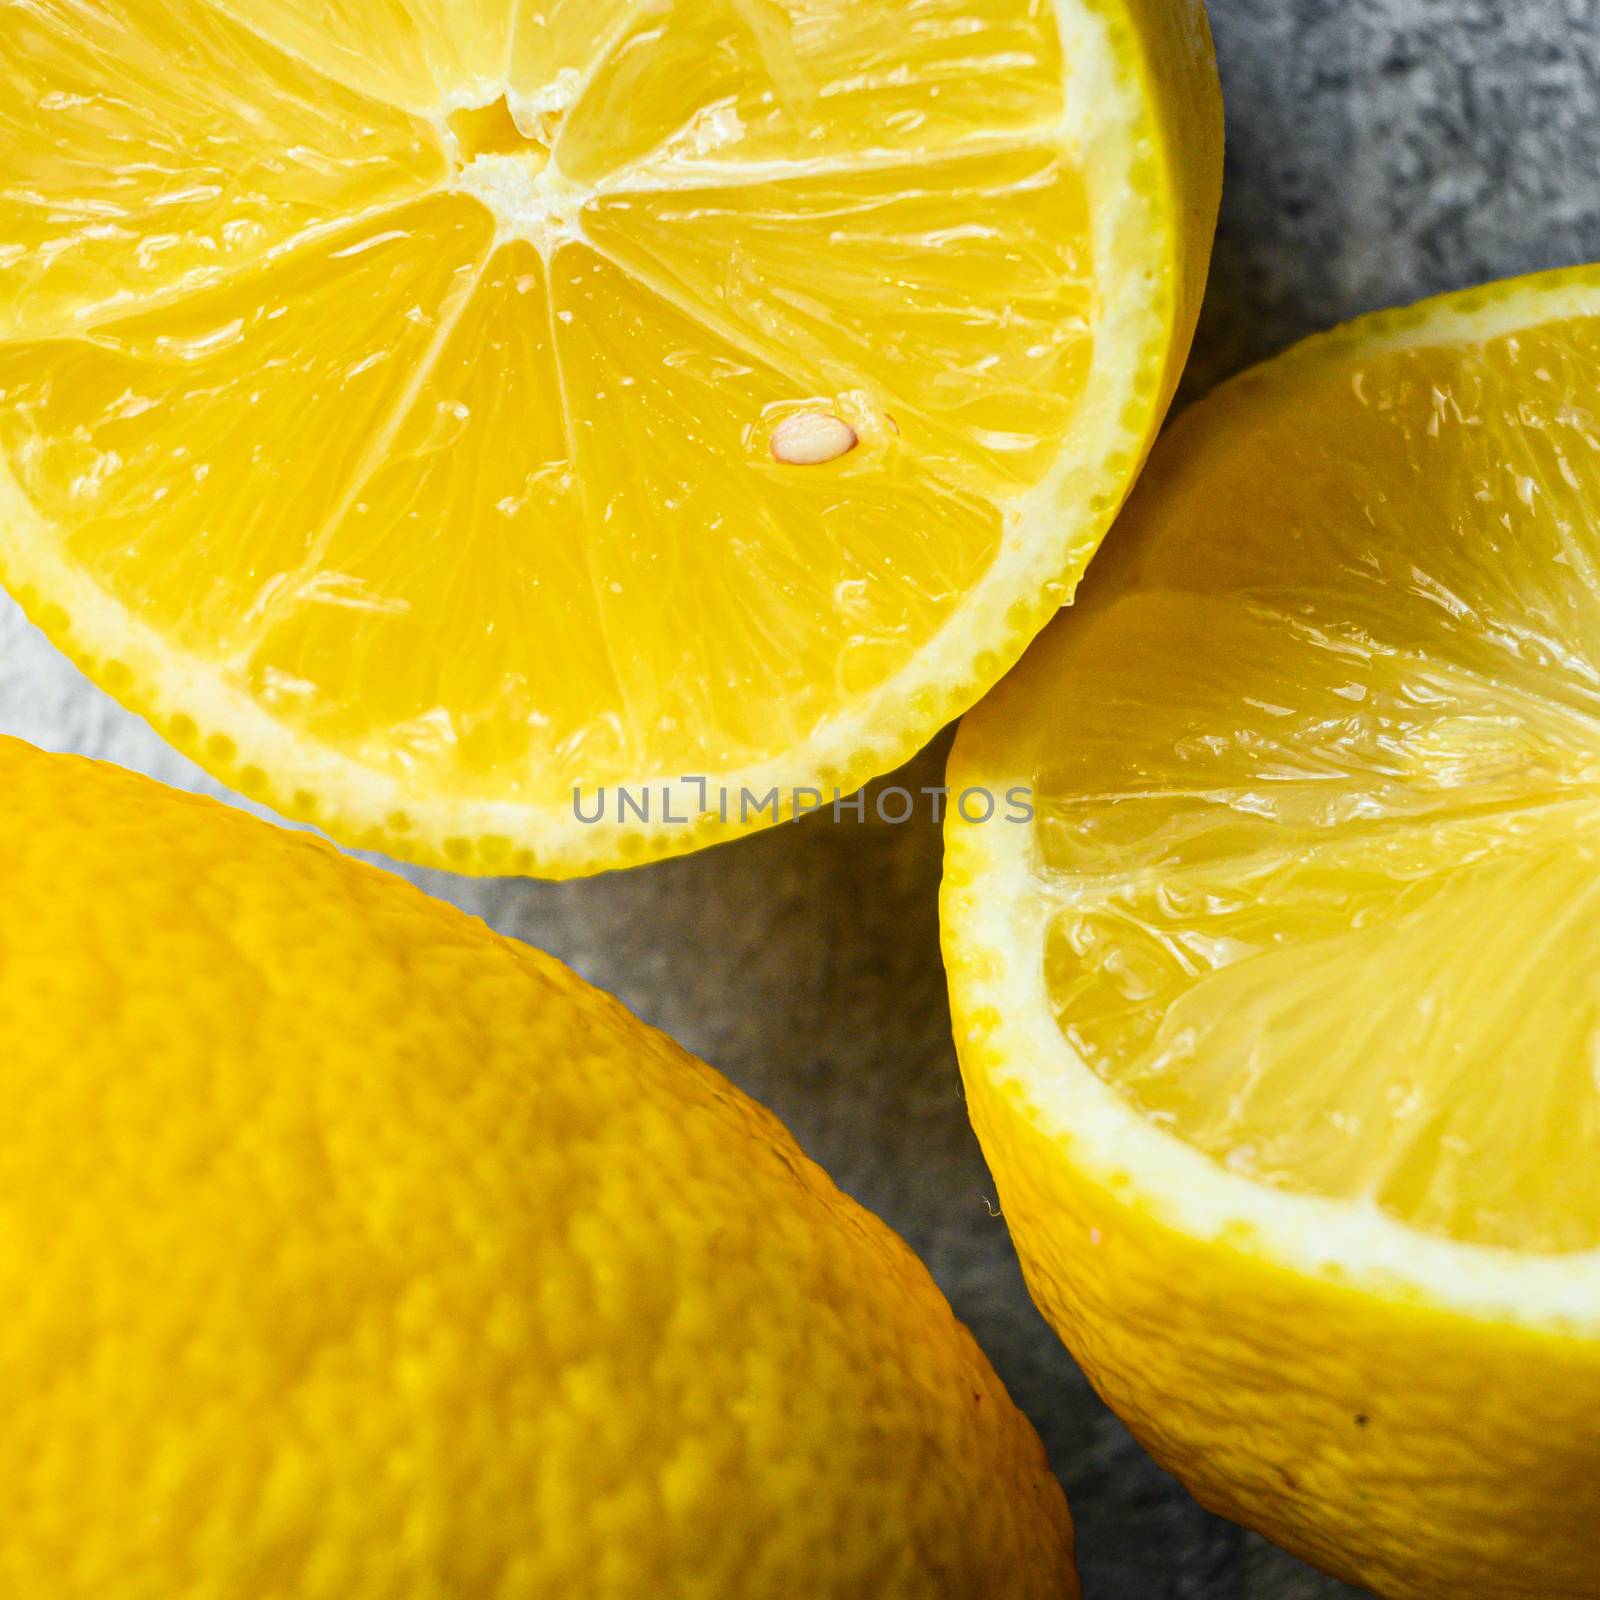 Ripe juicy Lemon curd closeup on gray background. Whole yellow lemon and lemon cut half, top view, vitamin c source. by Ilianesolenyi